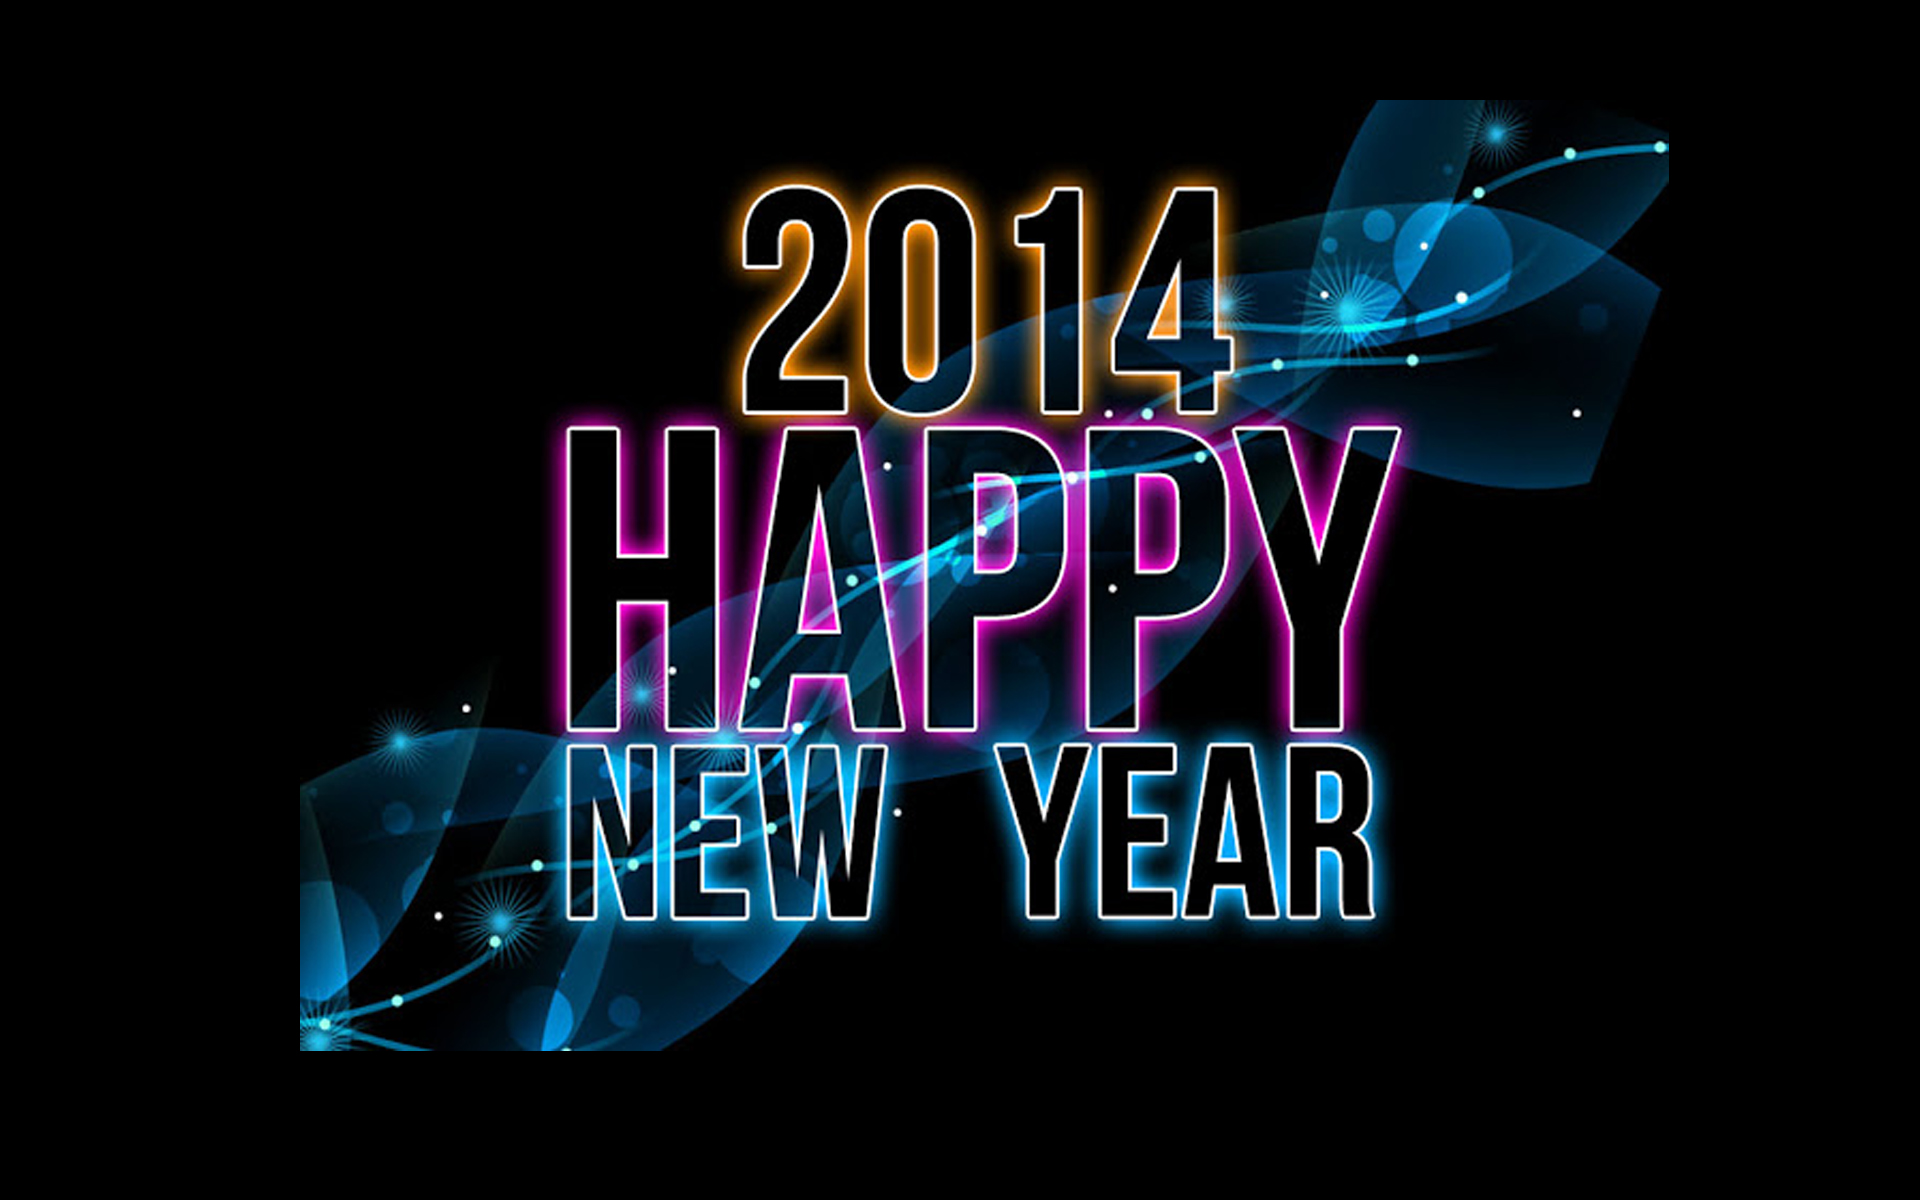 Beautiful Happy New Year 2014 Wallpaper for Greetings Incredible